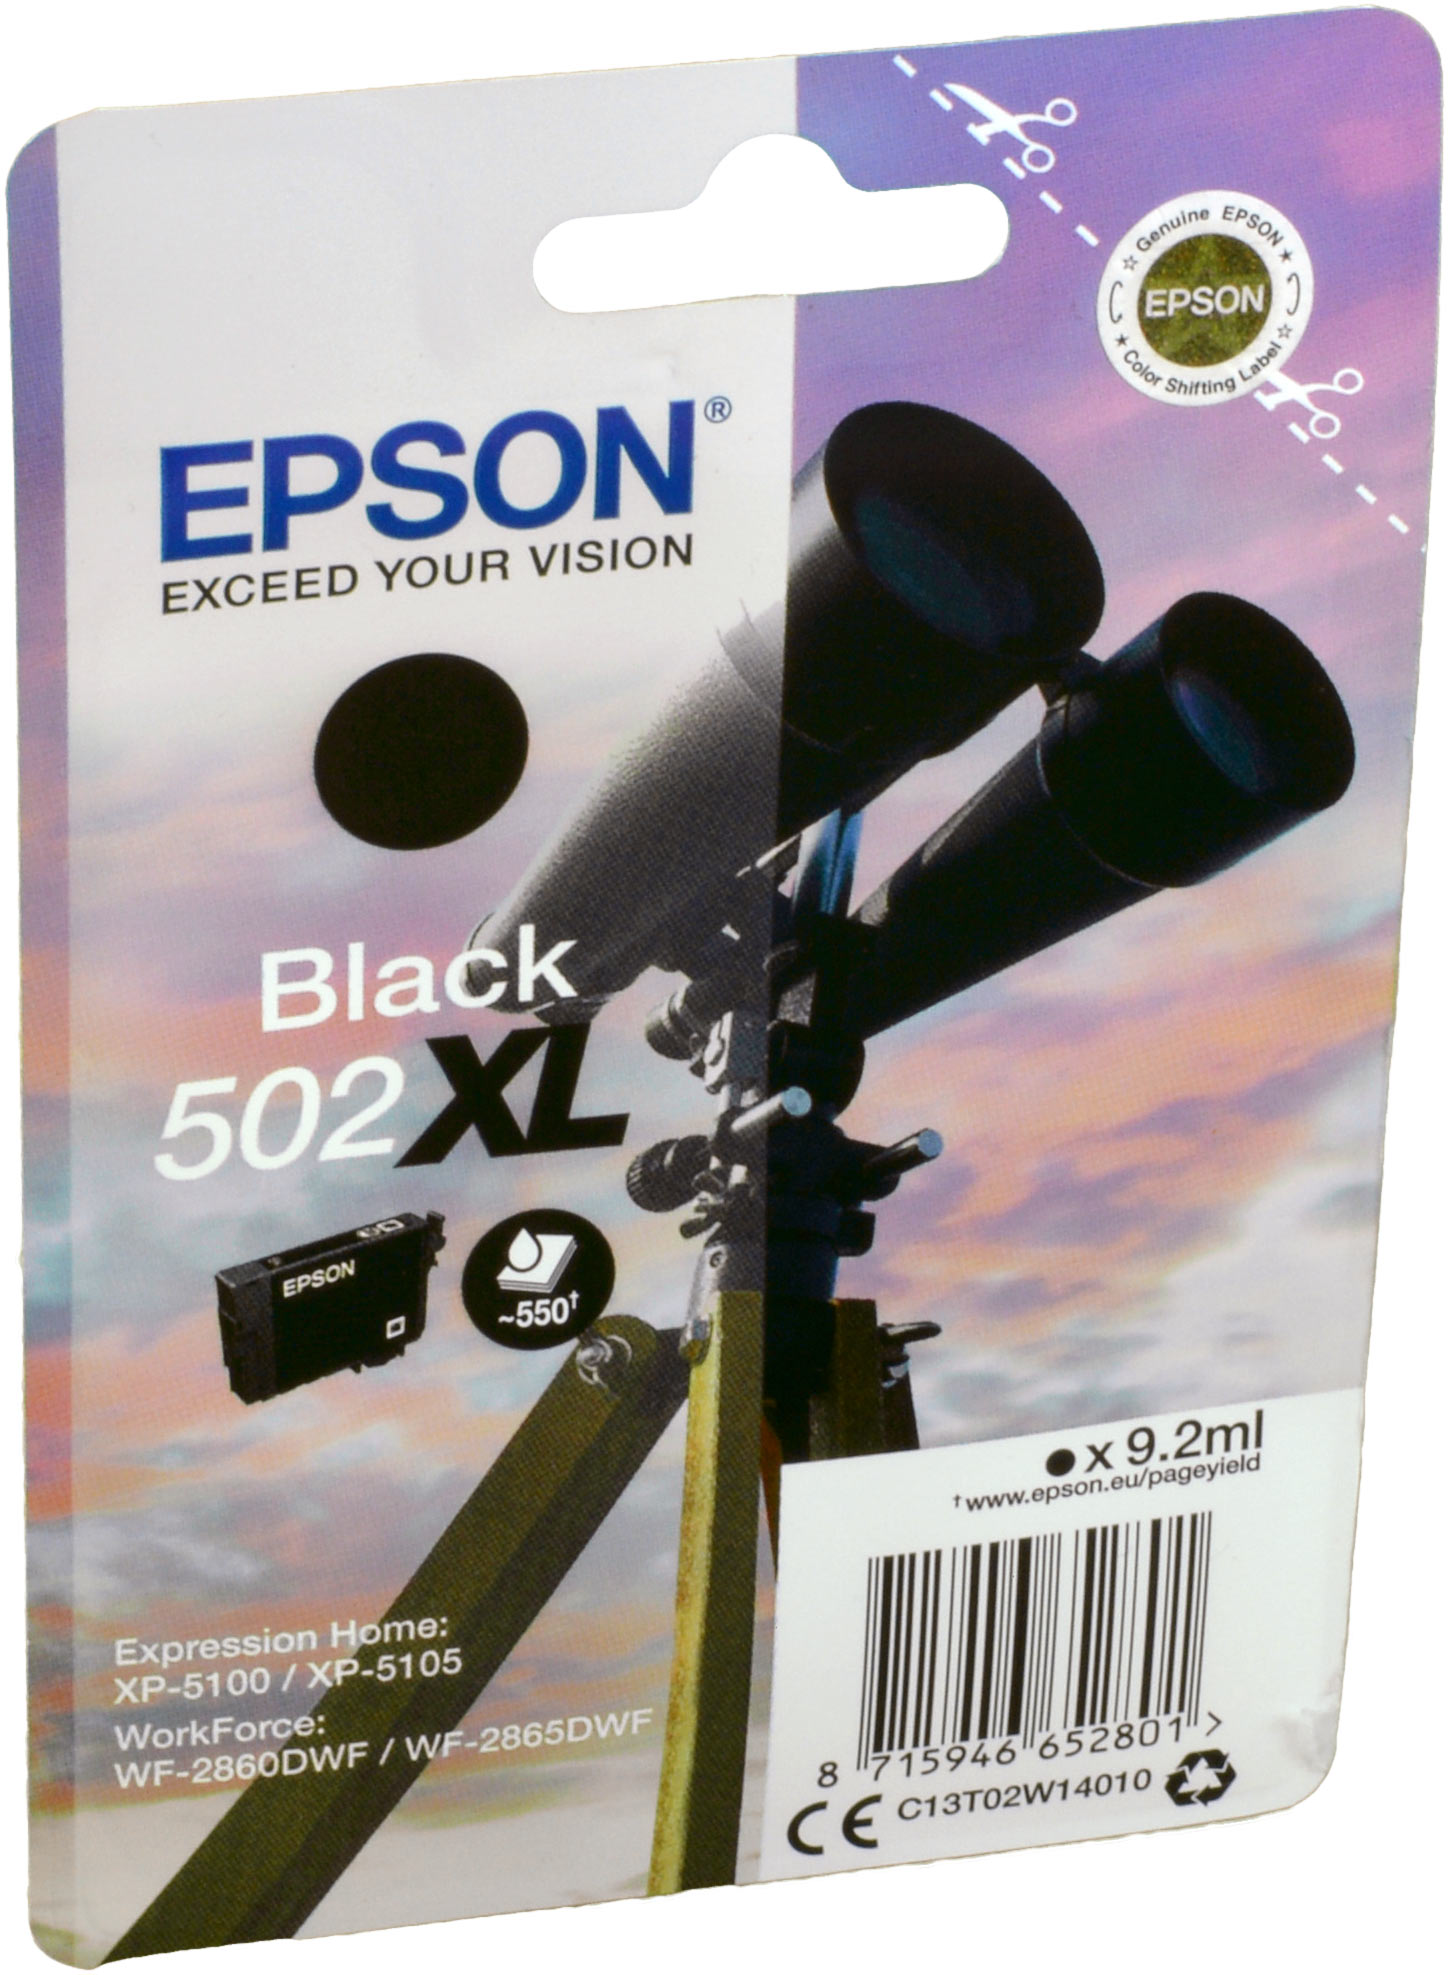 Epson Tinte C13T02W140  Black 502XL  schwarz